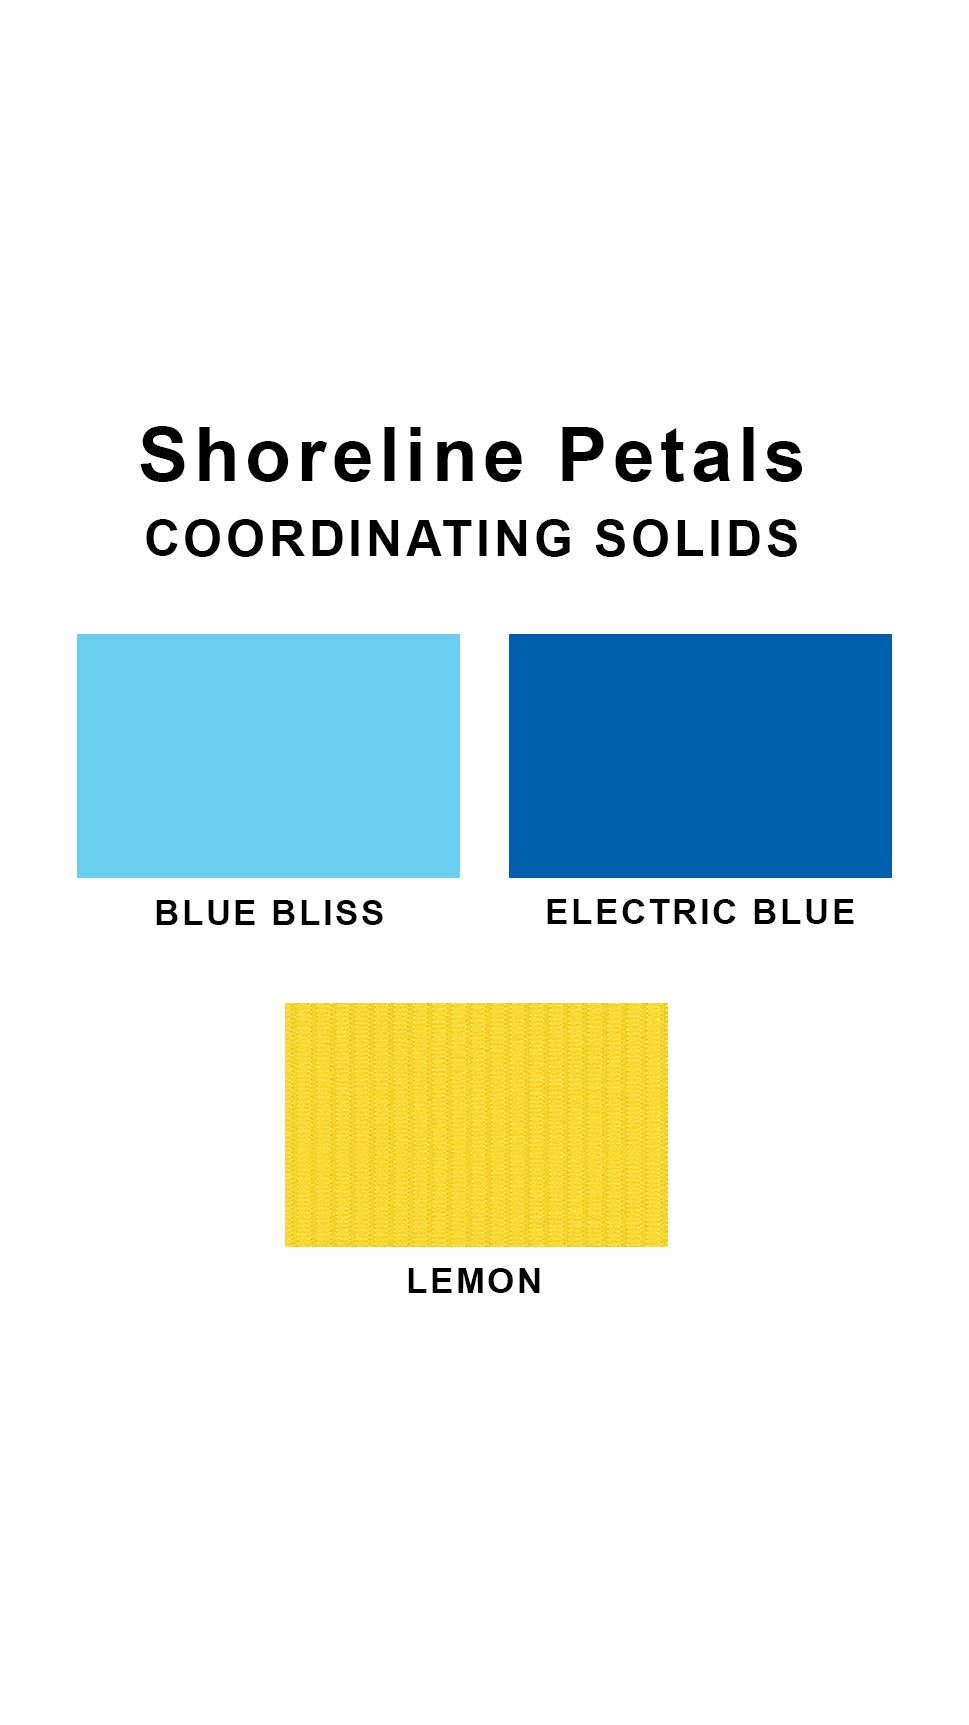 Coordinating solids chart for Shoreline Petals swimsuit print: Electric Blue, Blue Bliss and Lemon